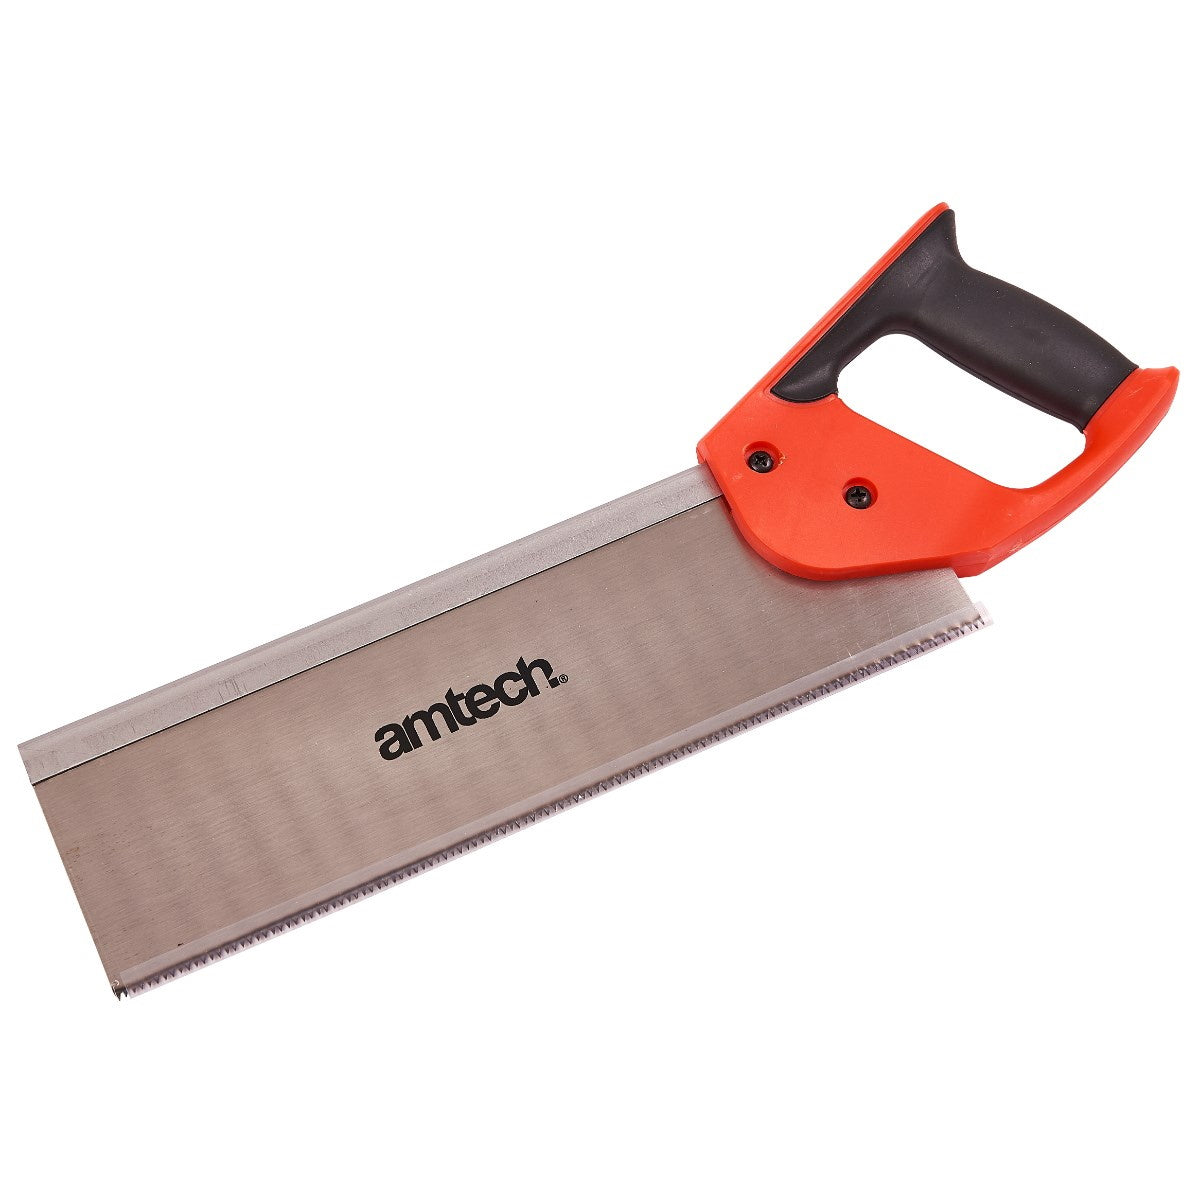 Amtech M0350 Tenon Saw 12" - Premium Tenon Saws from DK Tools - Just $4.99! Shop now at W Hurst & Son (IW) Ltd